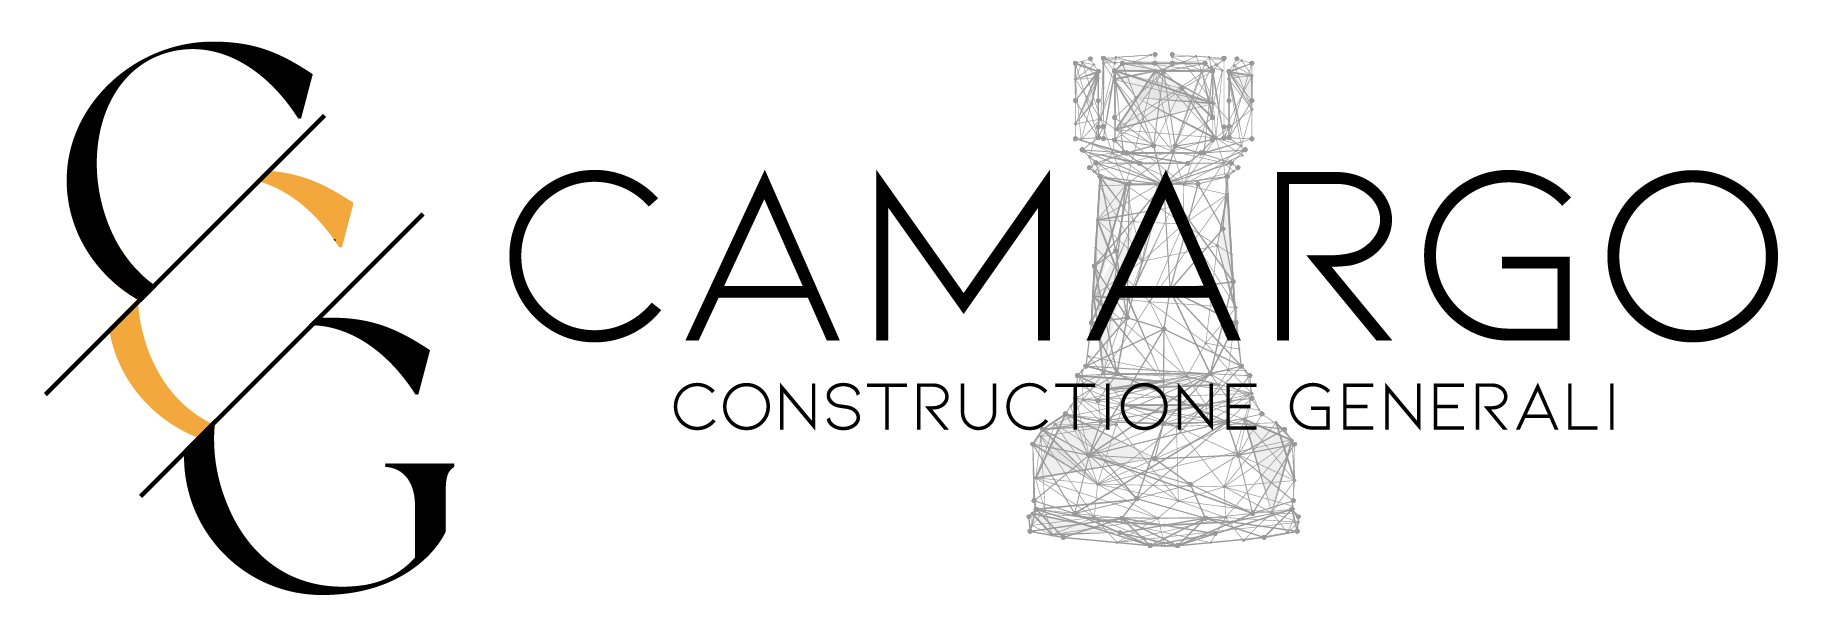 Camargo Constructione Generali logo